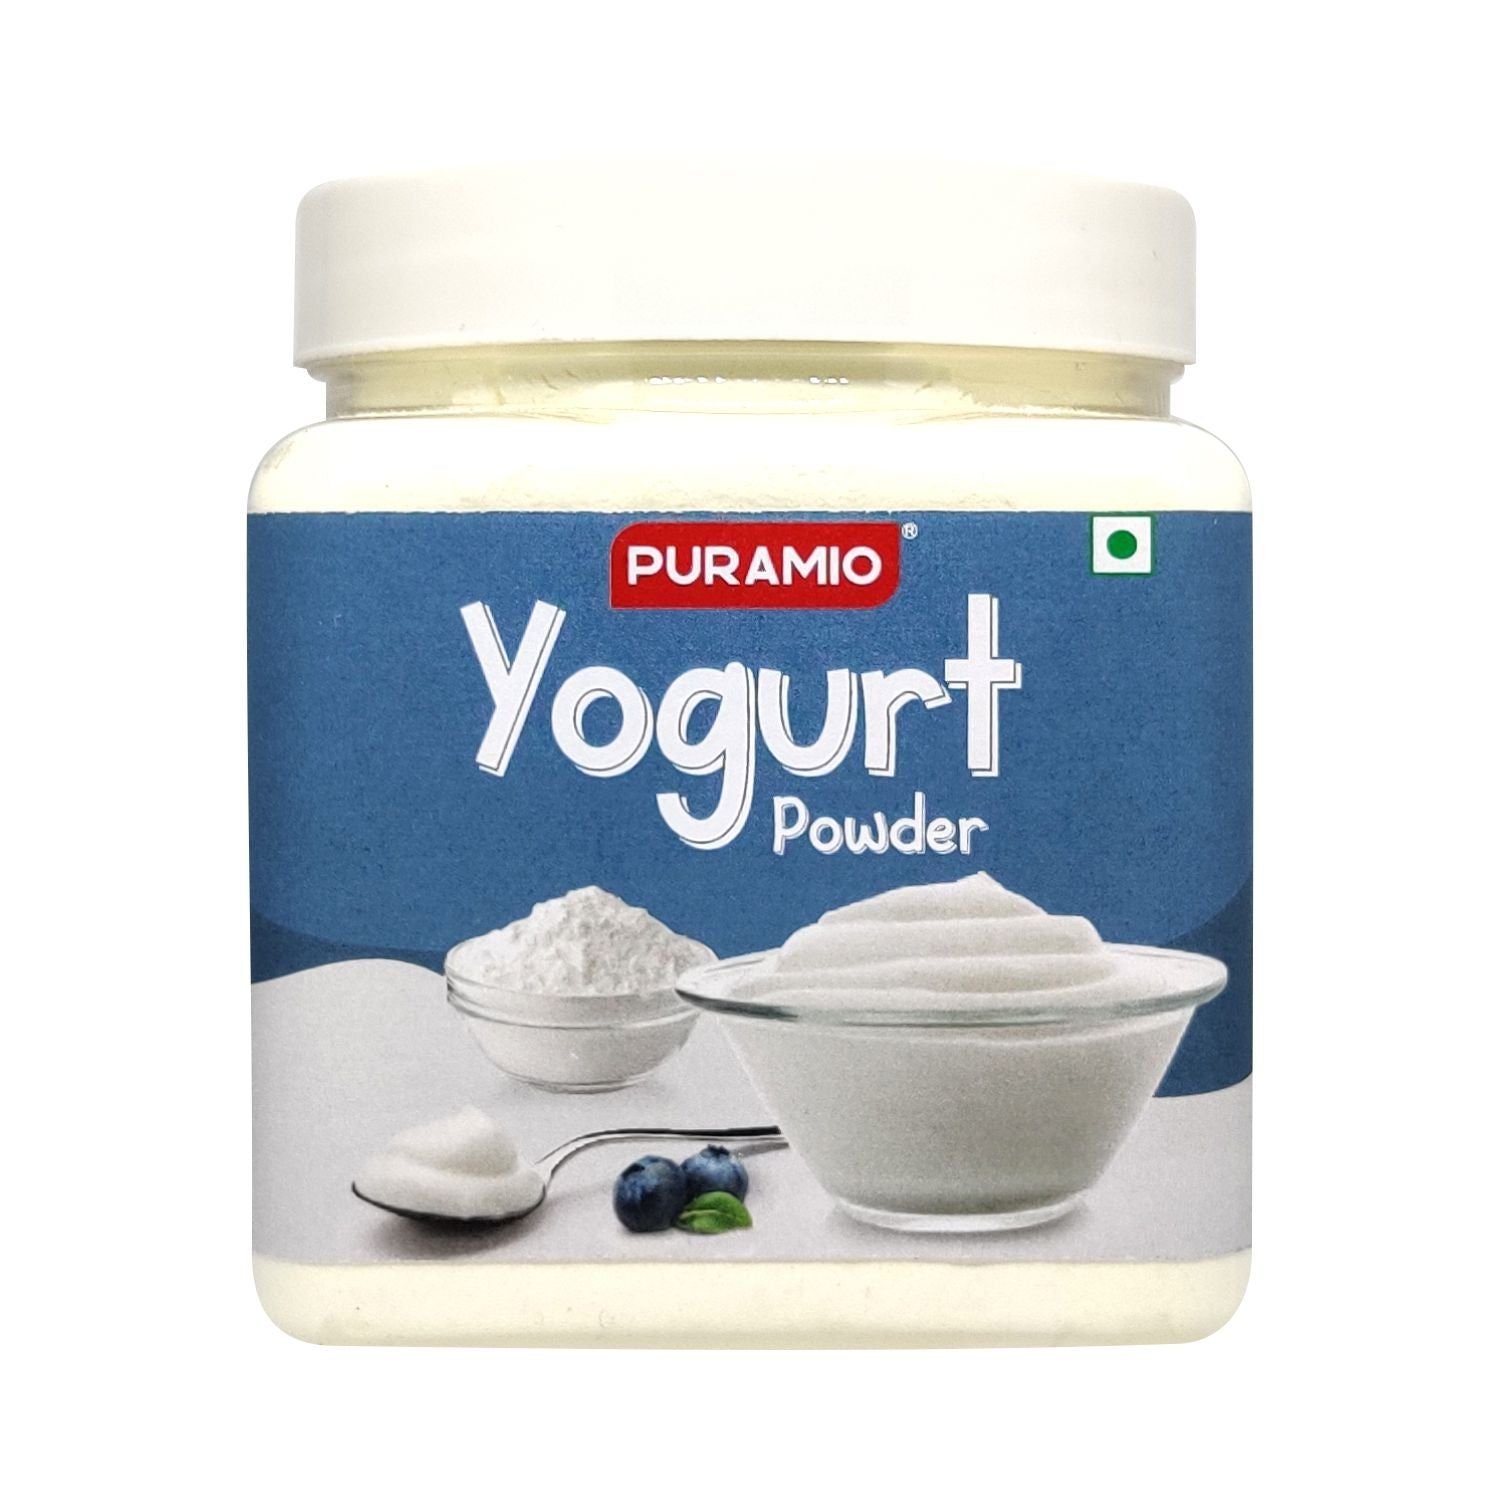 Puramio Yogurt Powder, 300 gm